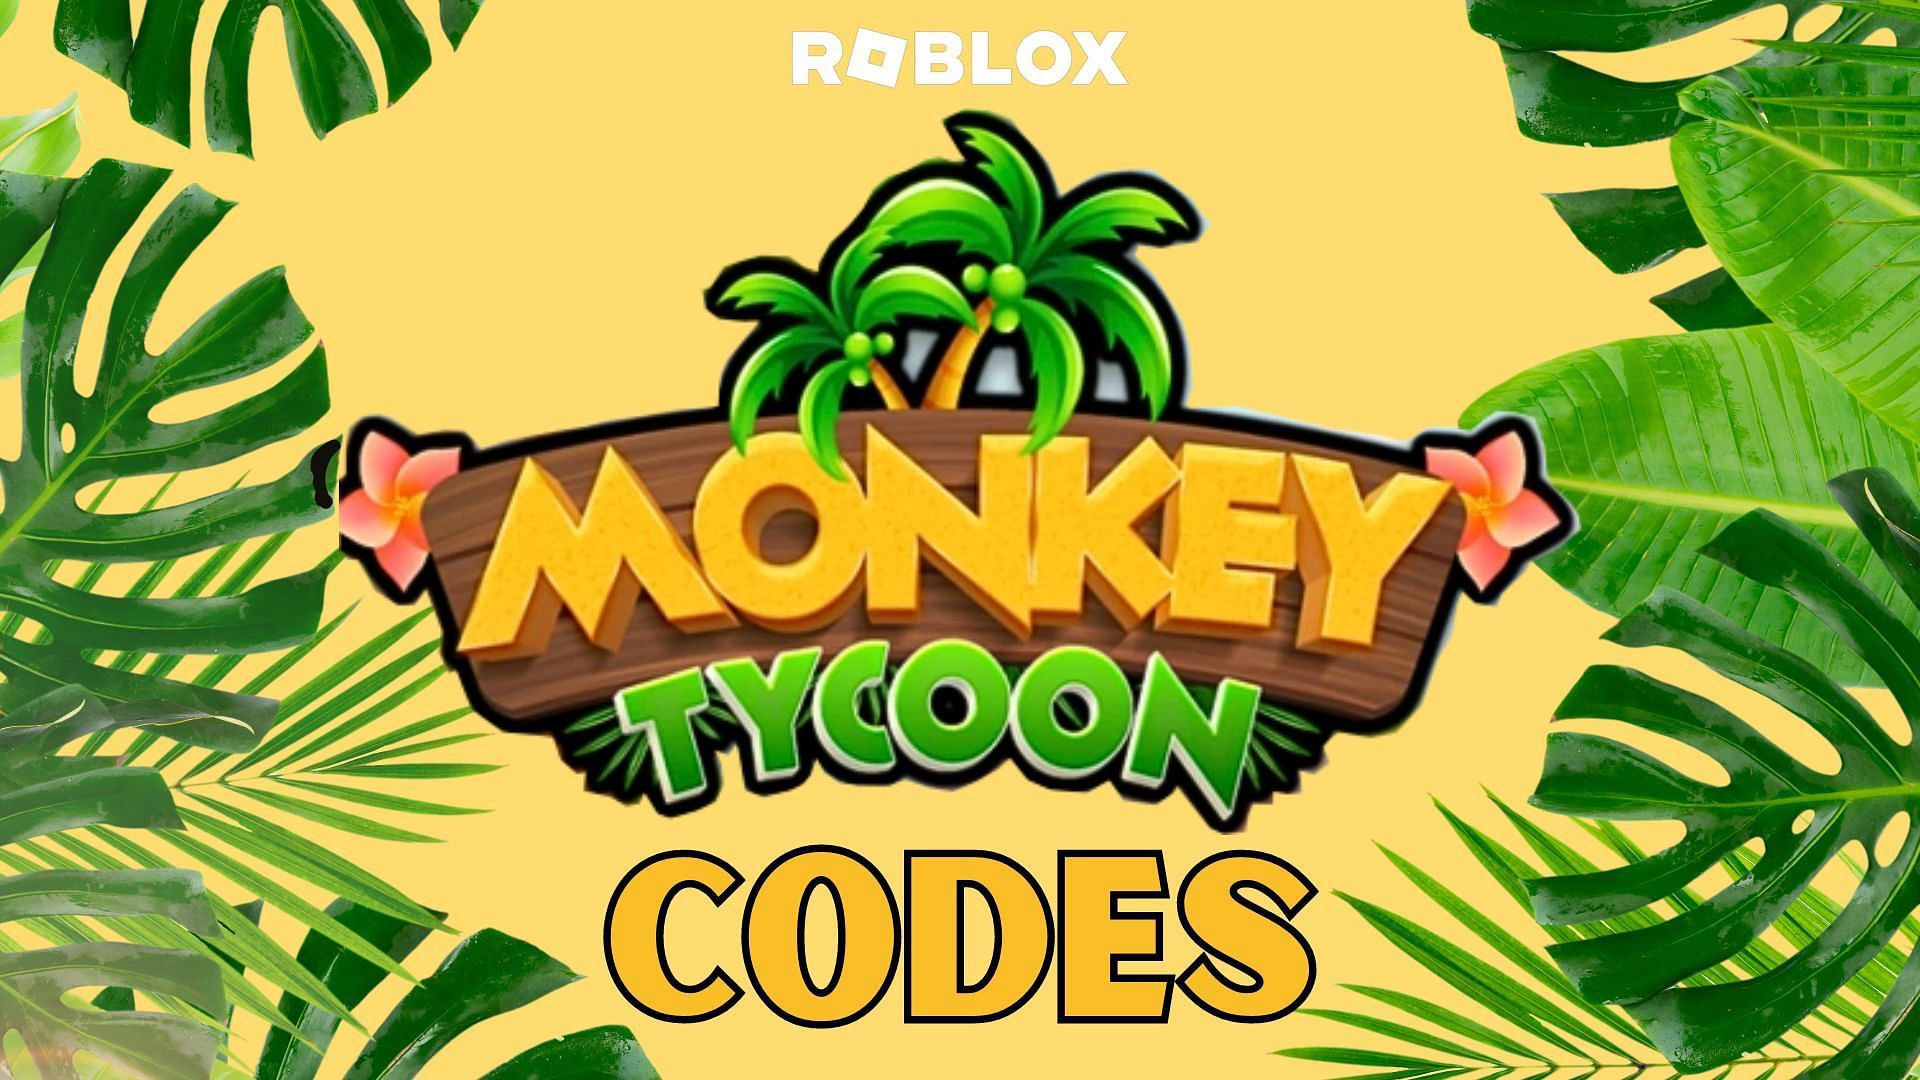 Monkey Tycoon latest codes